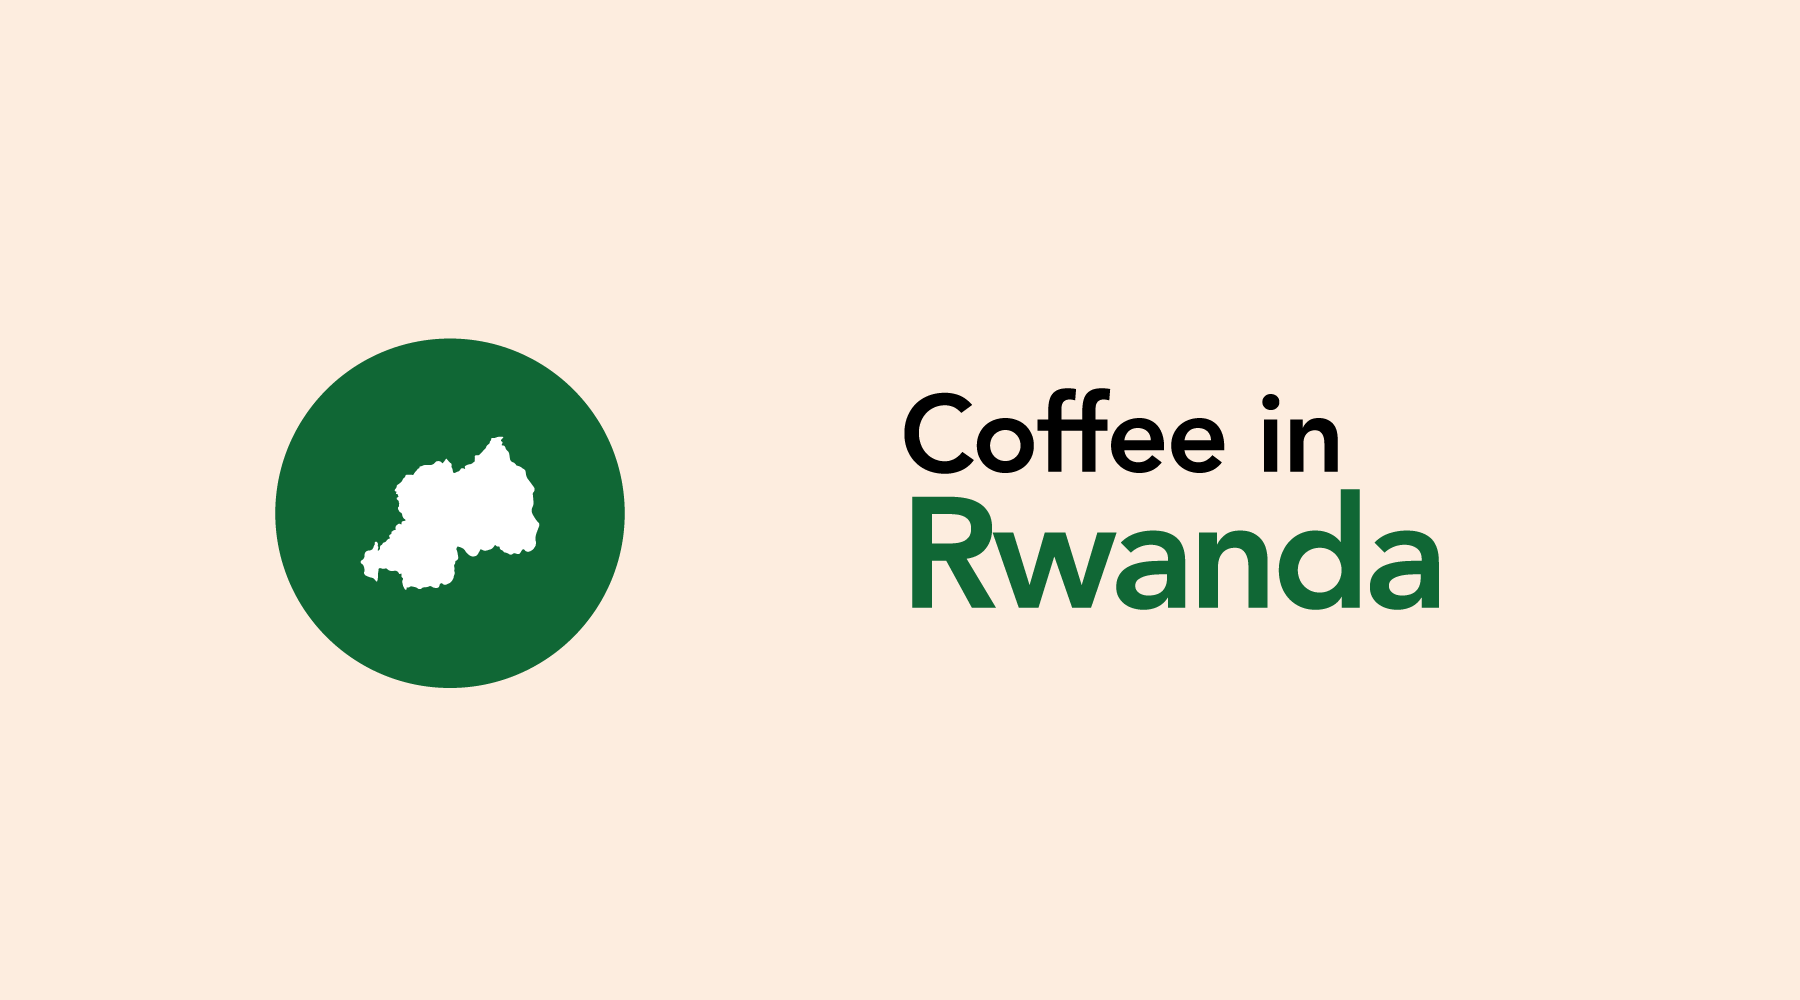 Graphic says Coffee in Rwanda with a Rwandan country icon